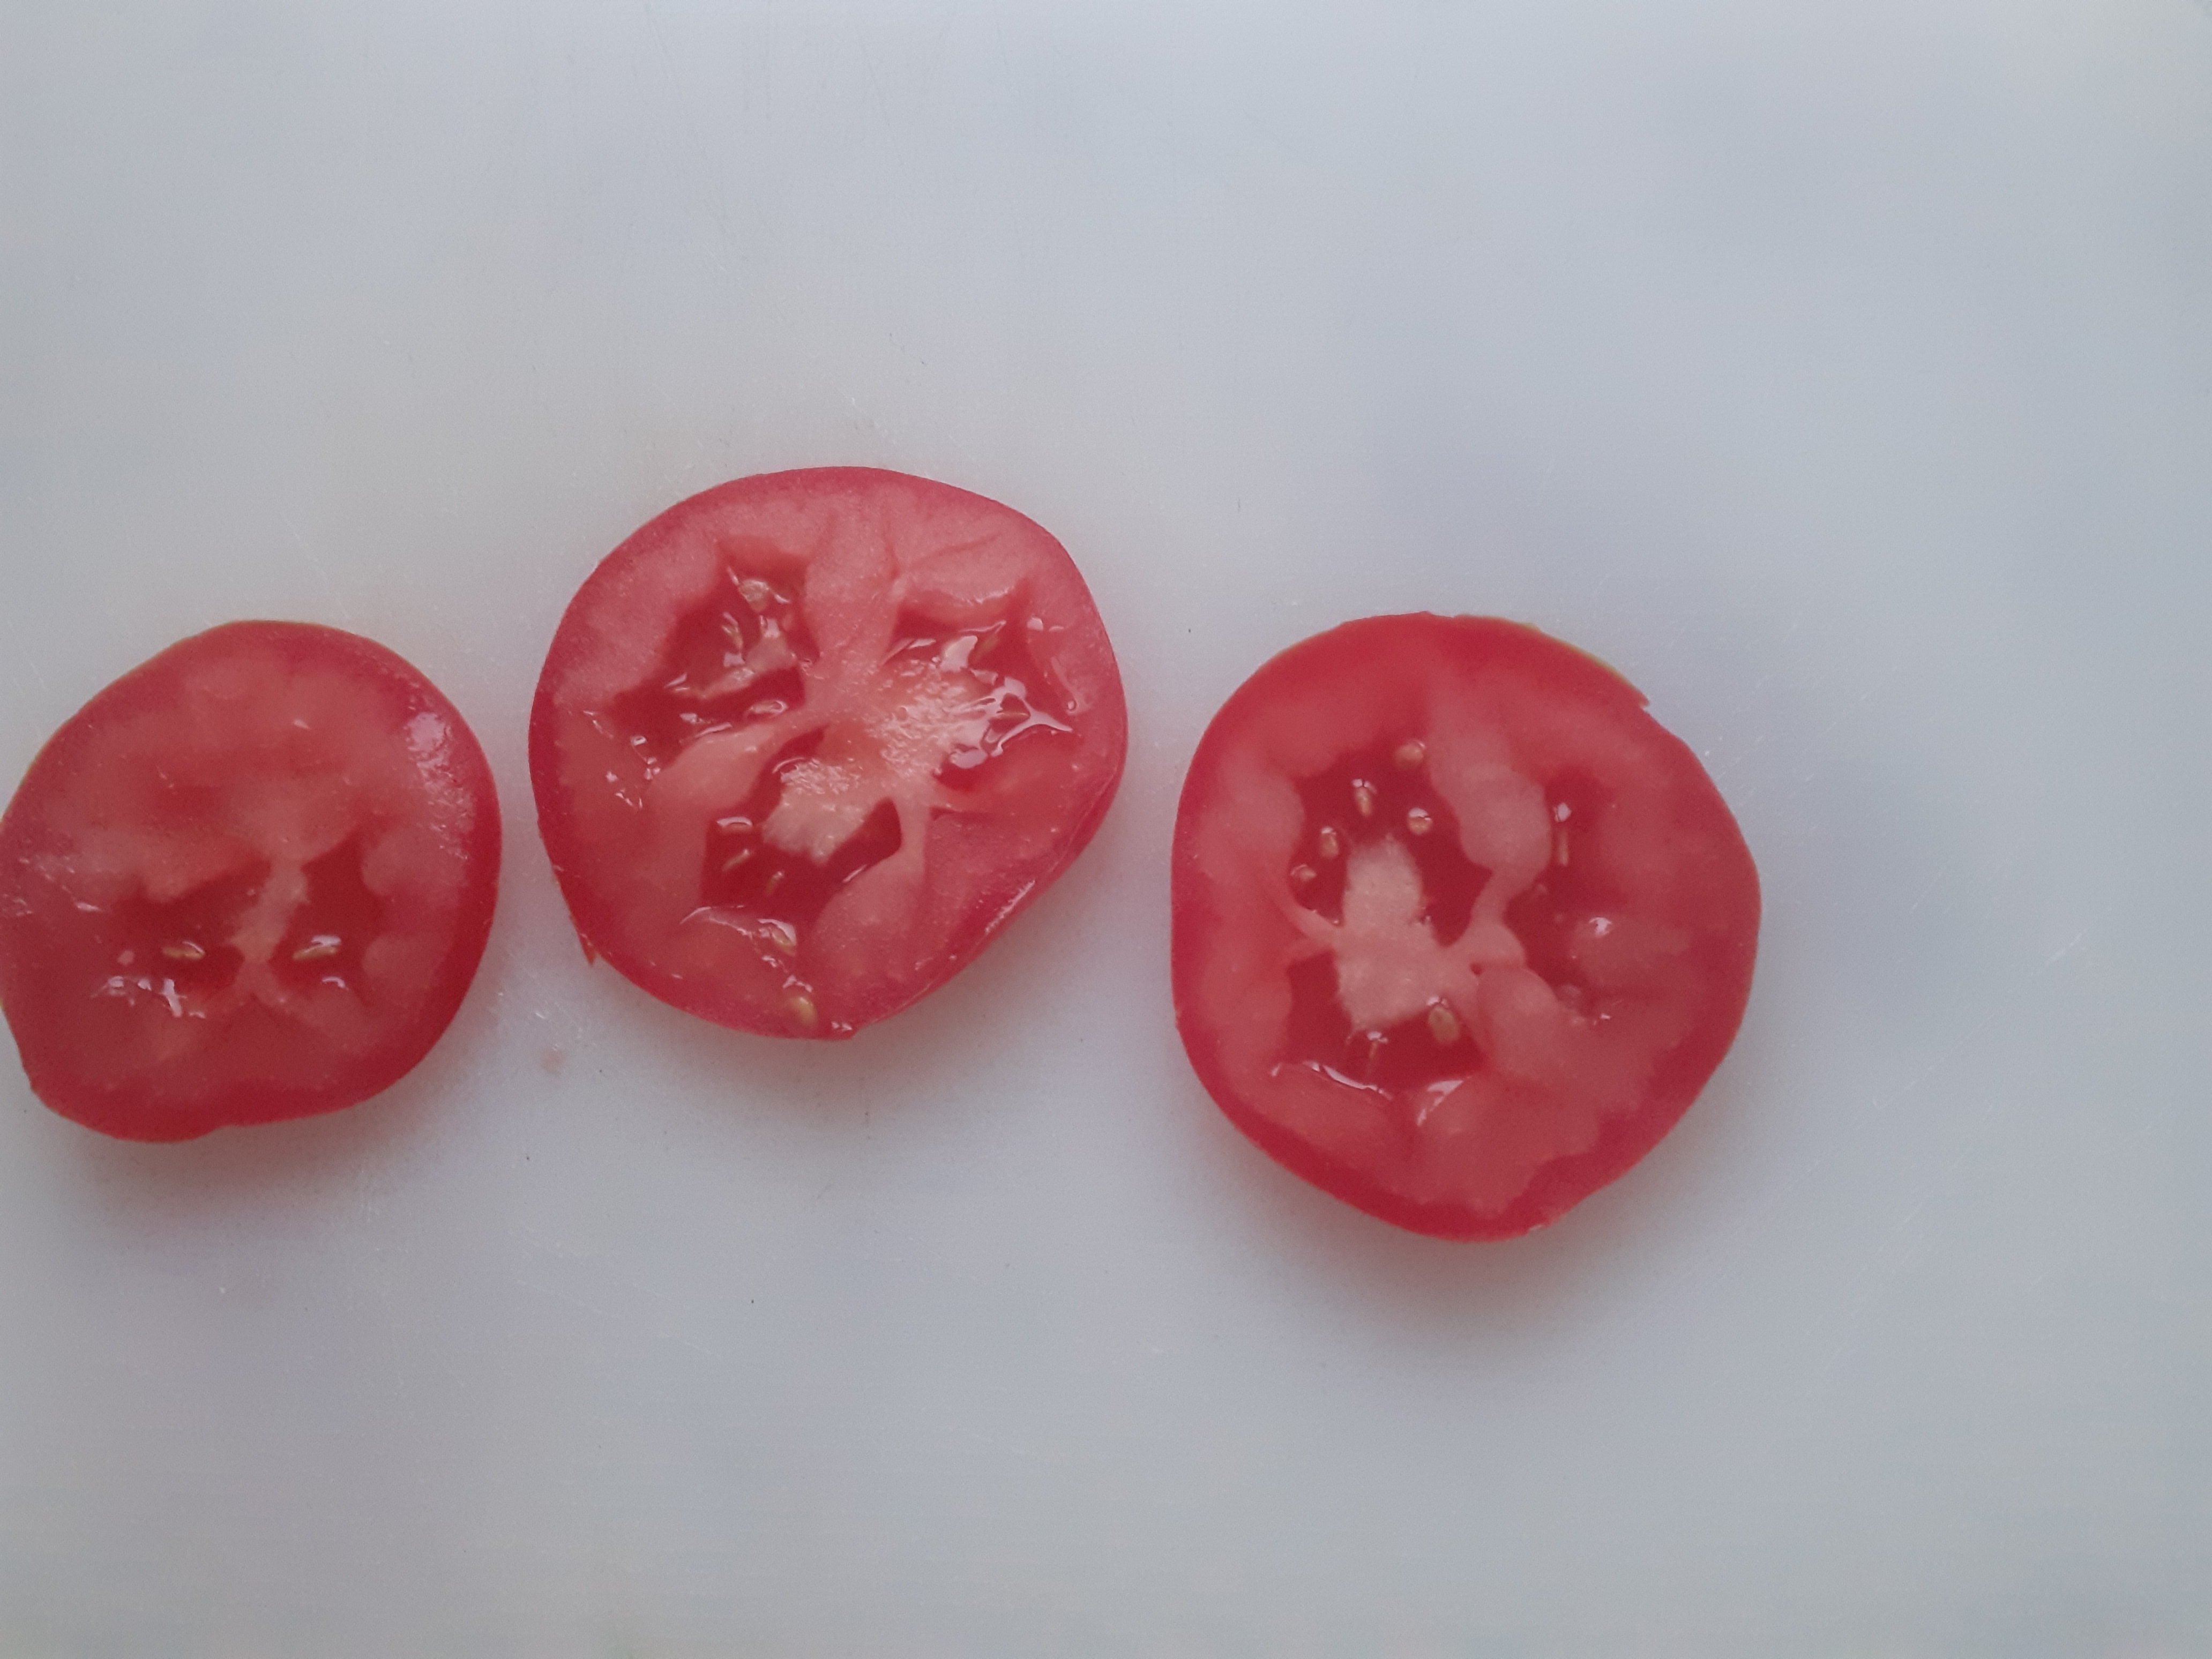 Cortamos o tomate